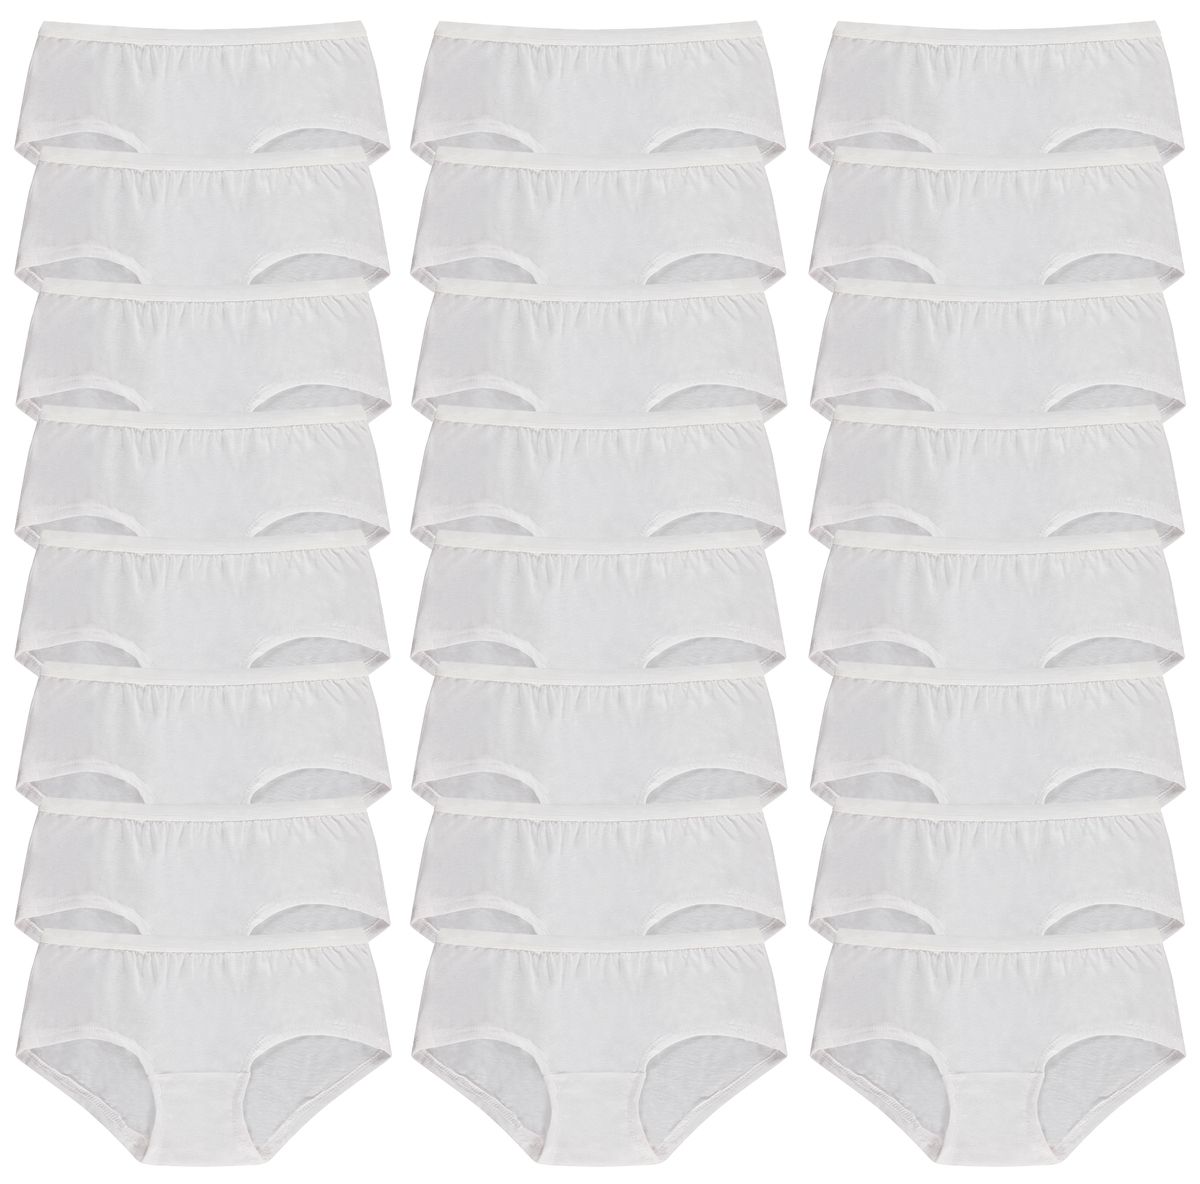 Yacht & Smith Womens White Underwear, Panties In Bulk, 95% Cotton - Size S